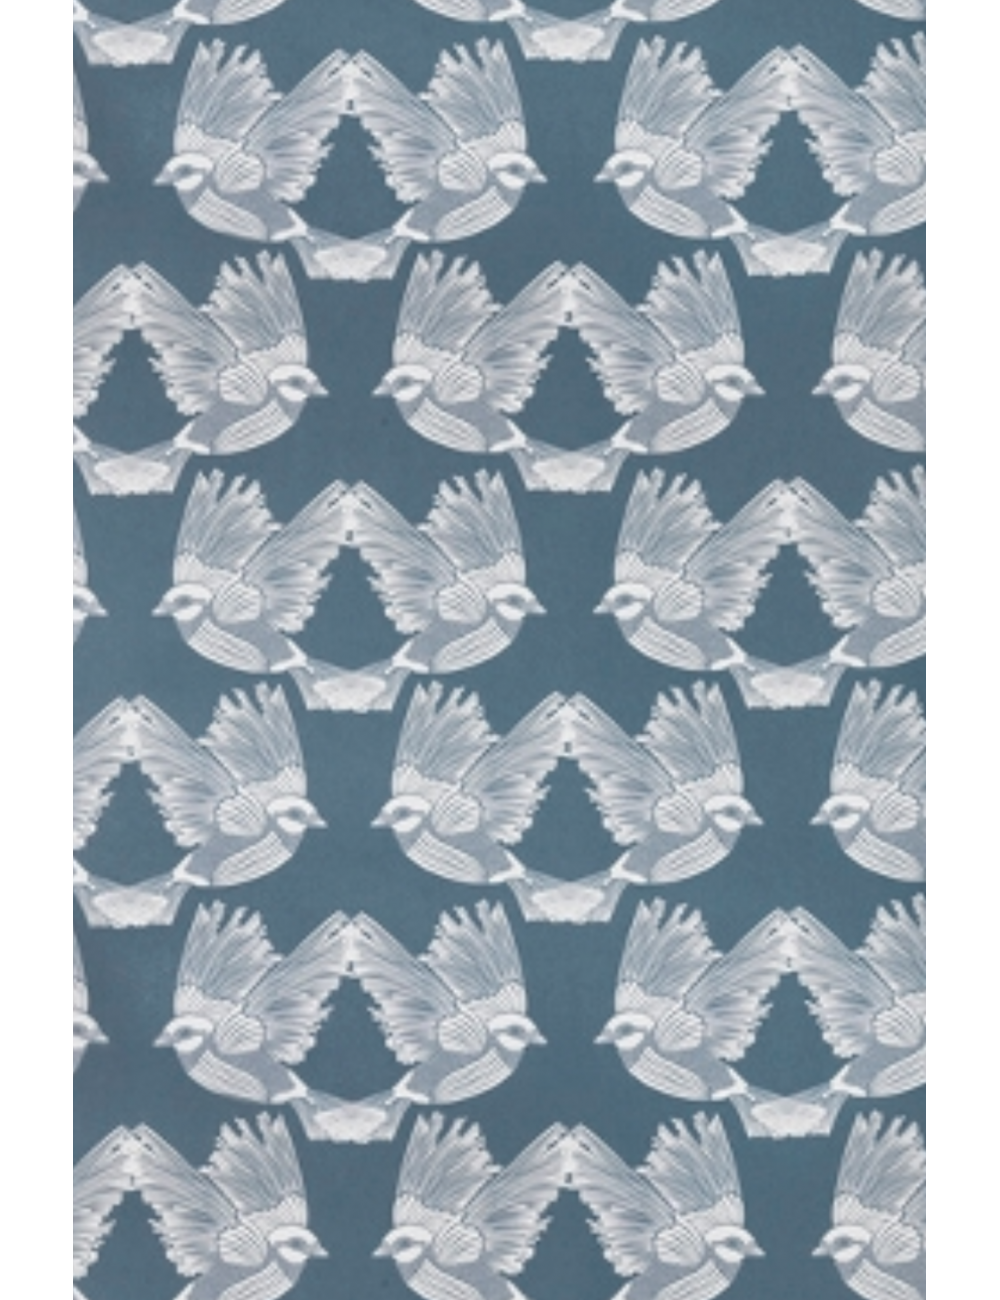 off white wallpaper,pattern,aqua,blue,symmetry,teal